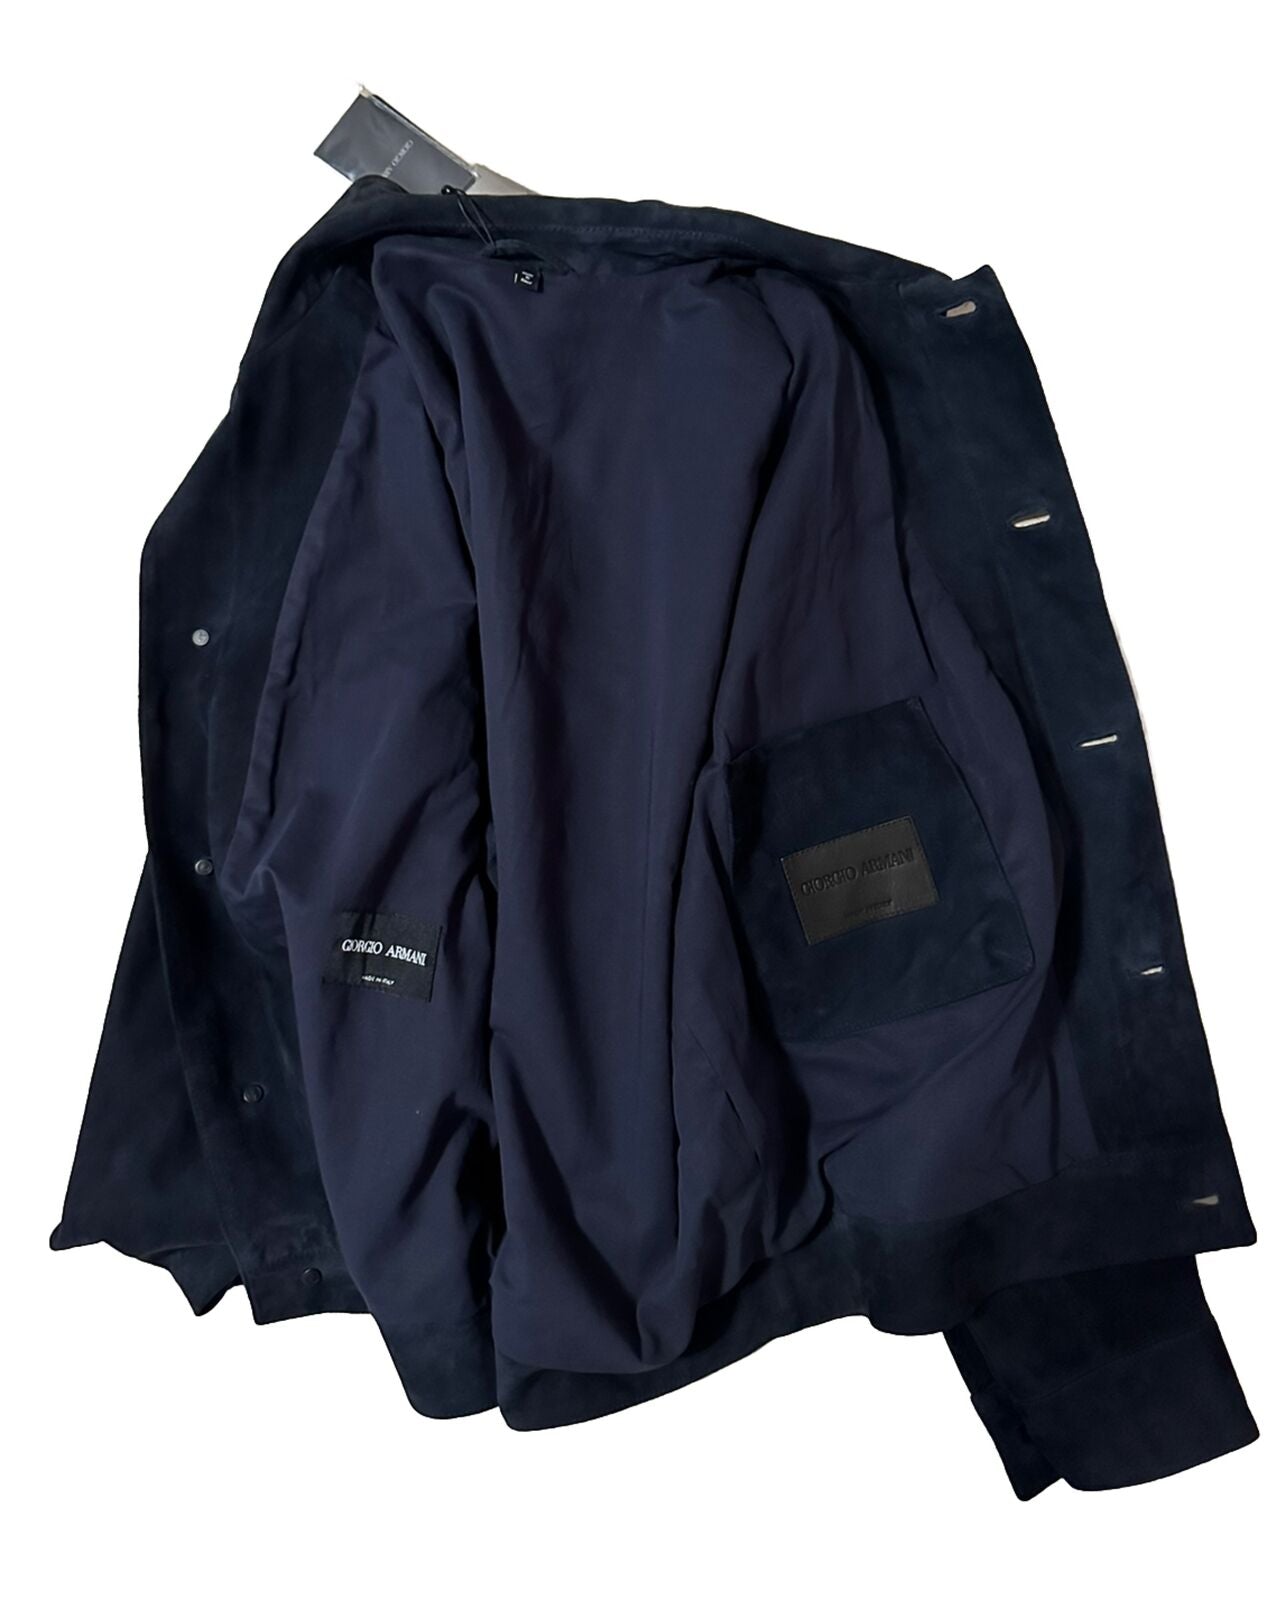 NWT $5800 Giorgio Armani Men’s Light Suede Jacket Blazer Navy 42 US/52 Eu Italy